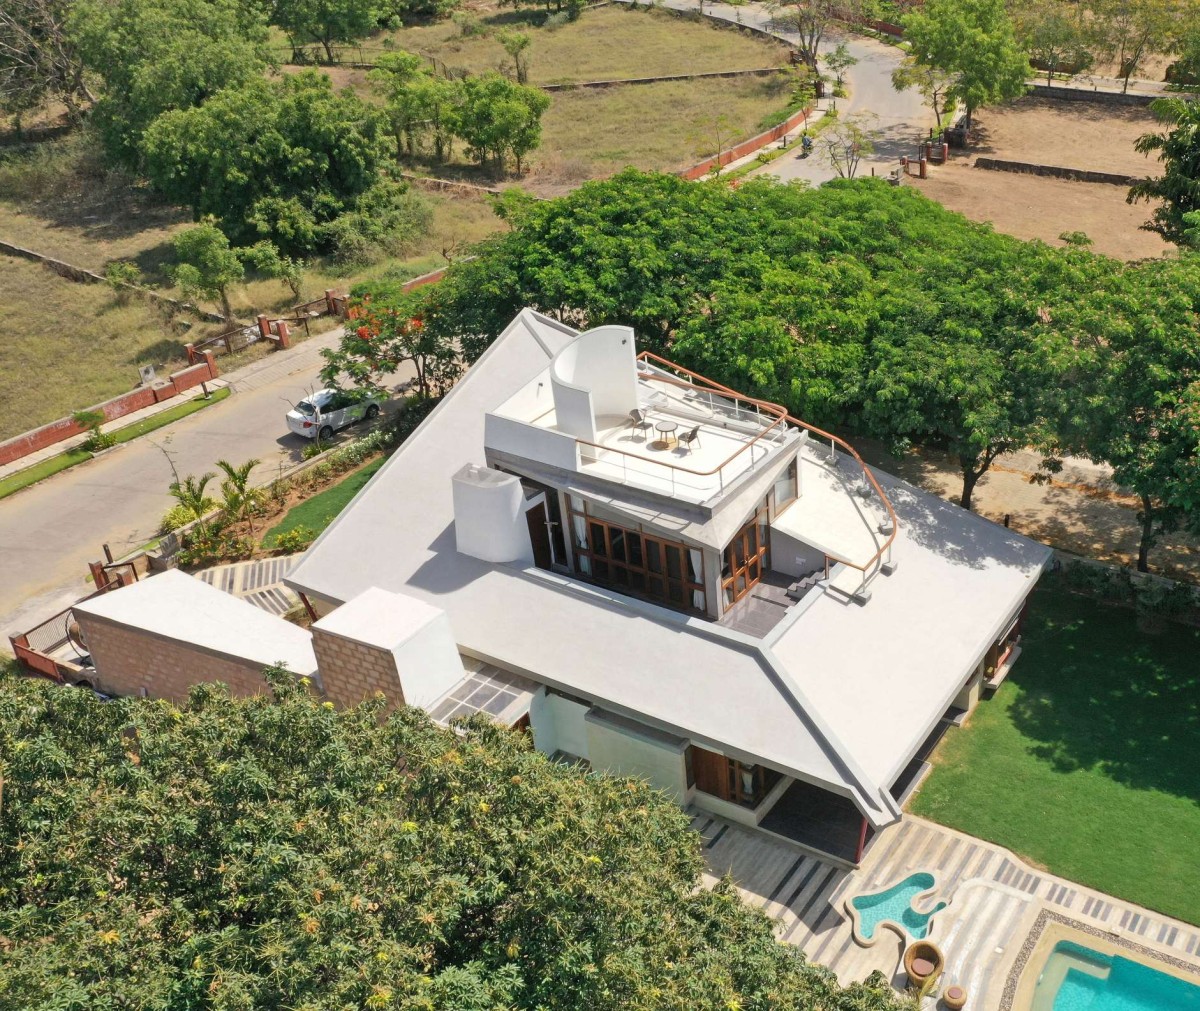 Bird eye view of House at Gulmohar Greens by Studio 4000